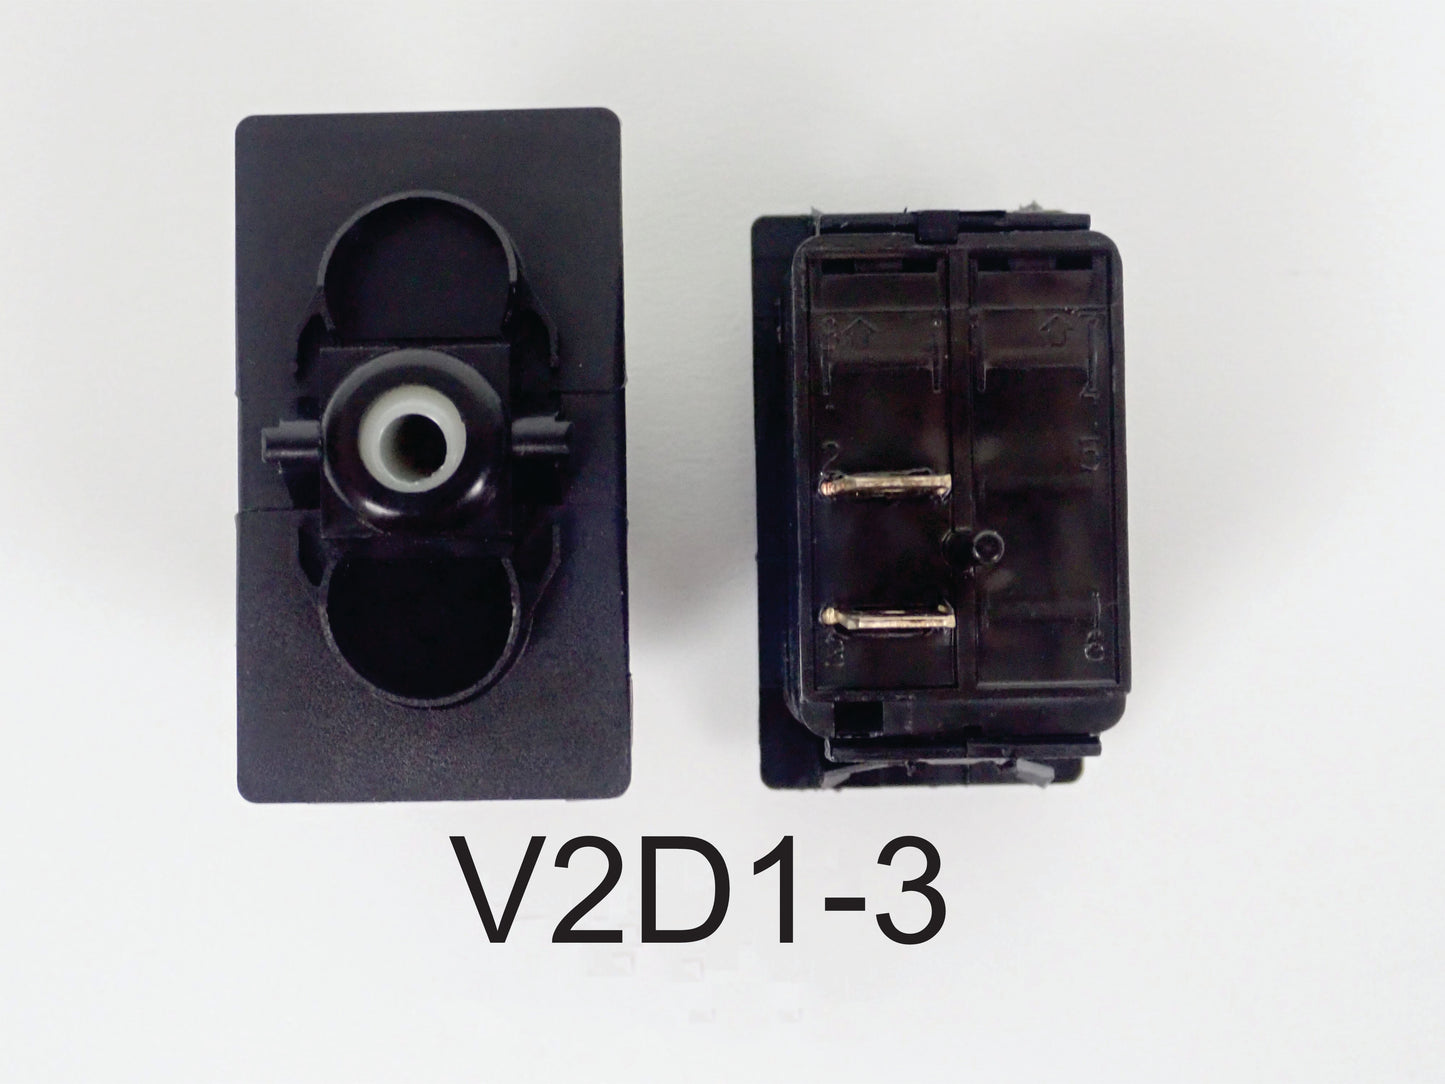 V2D1-3 Carling (ON)/OFF Momentary single pole rocker switch no lamp